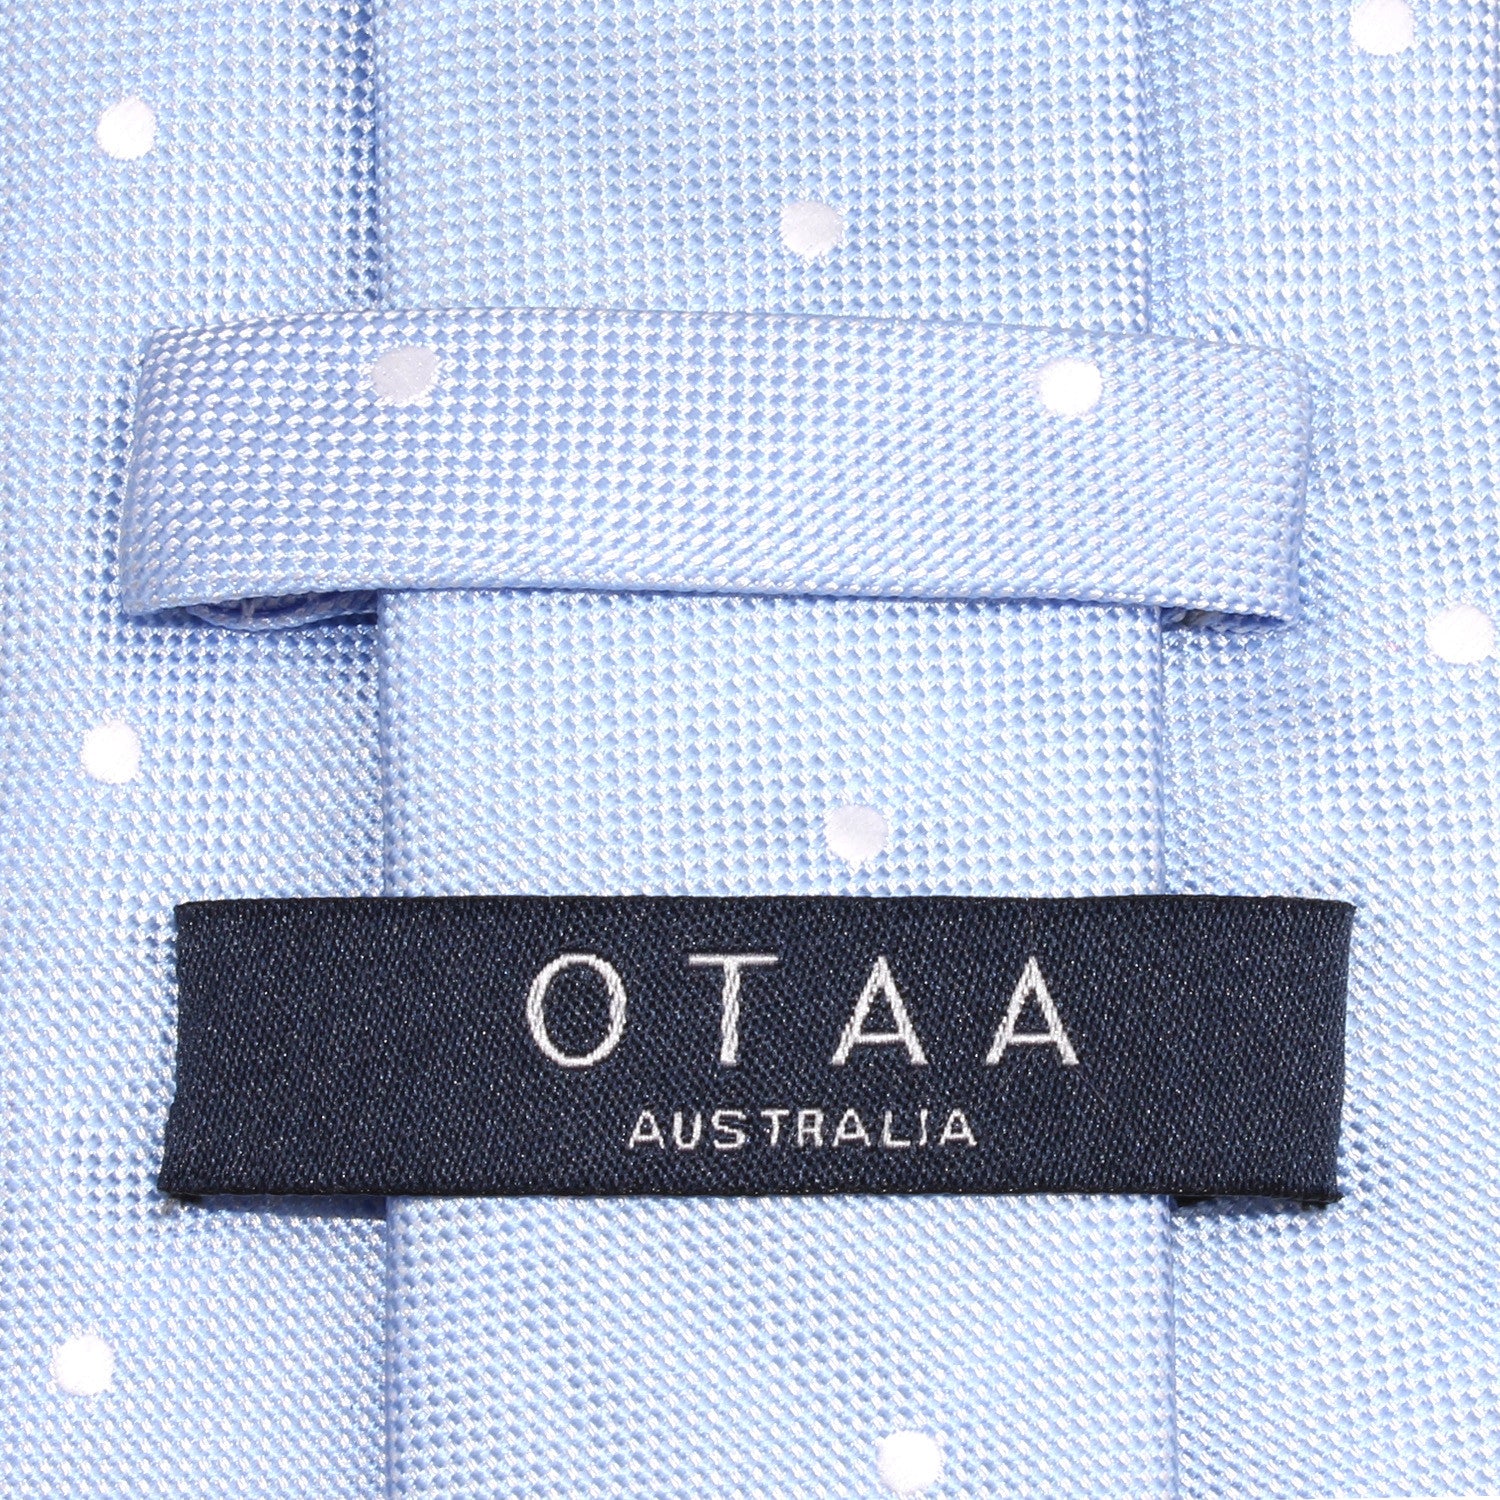 Mint Blue with White Polka Dots Skinny Tie OTAA Australia